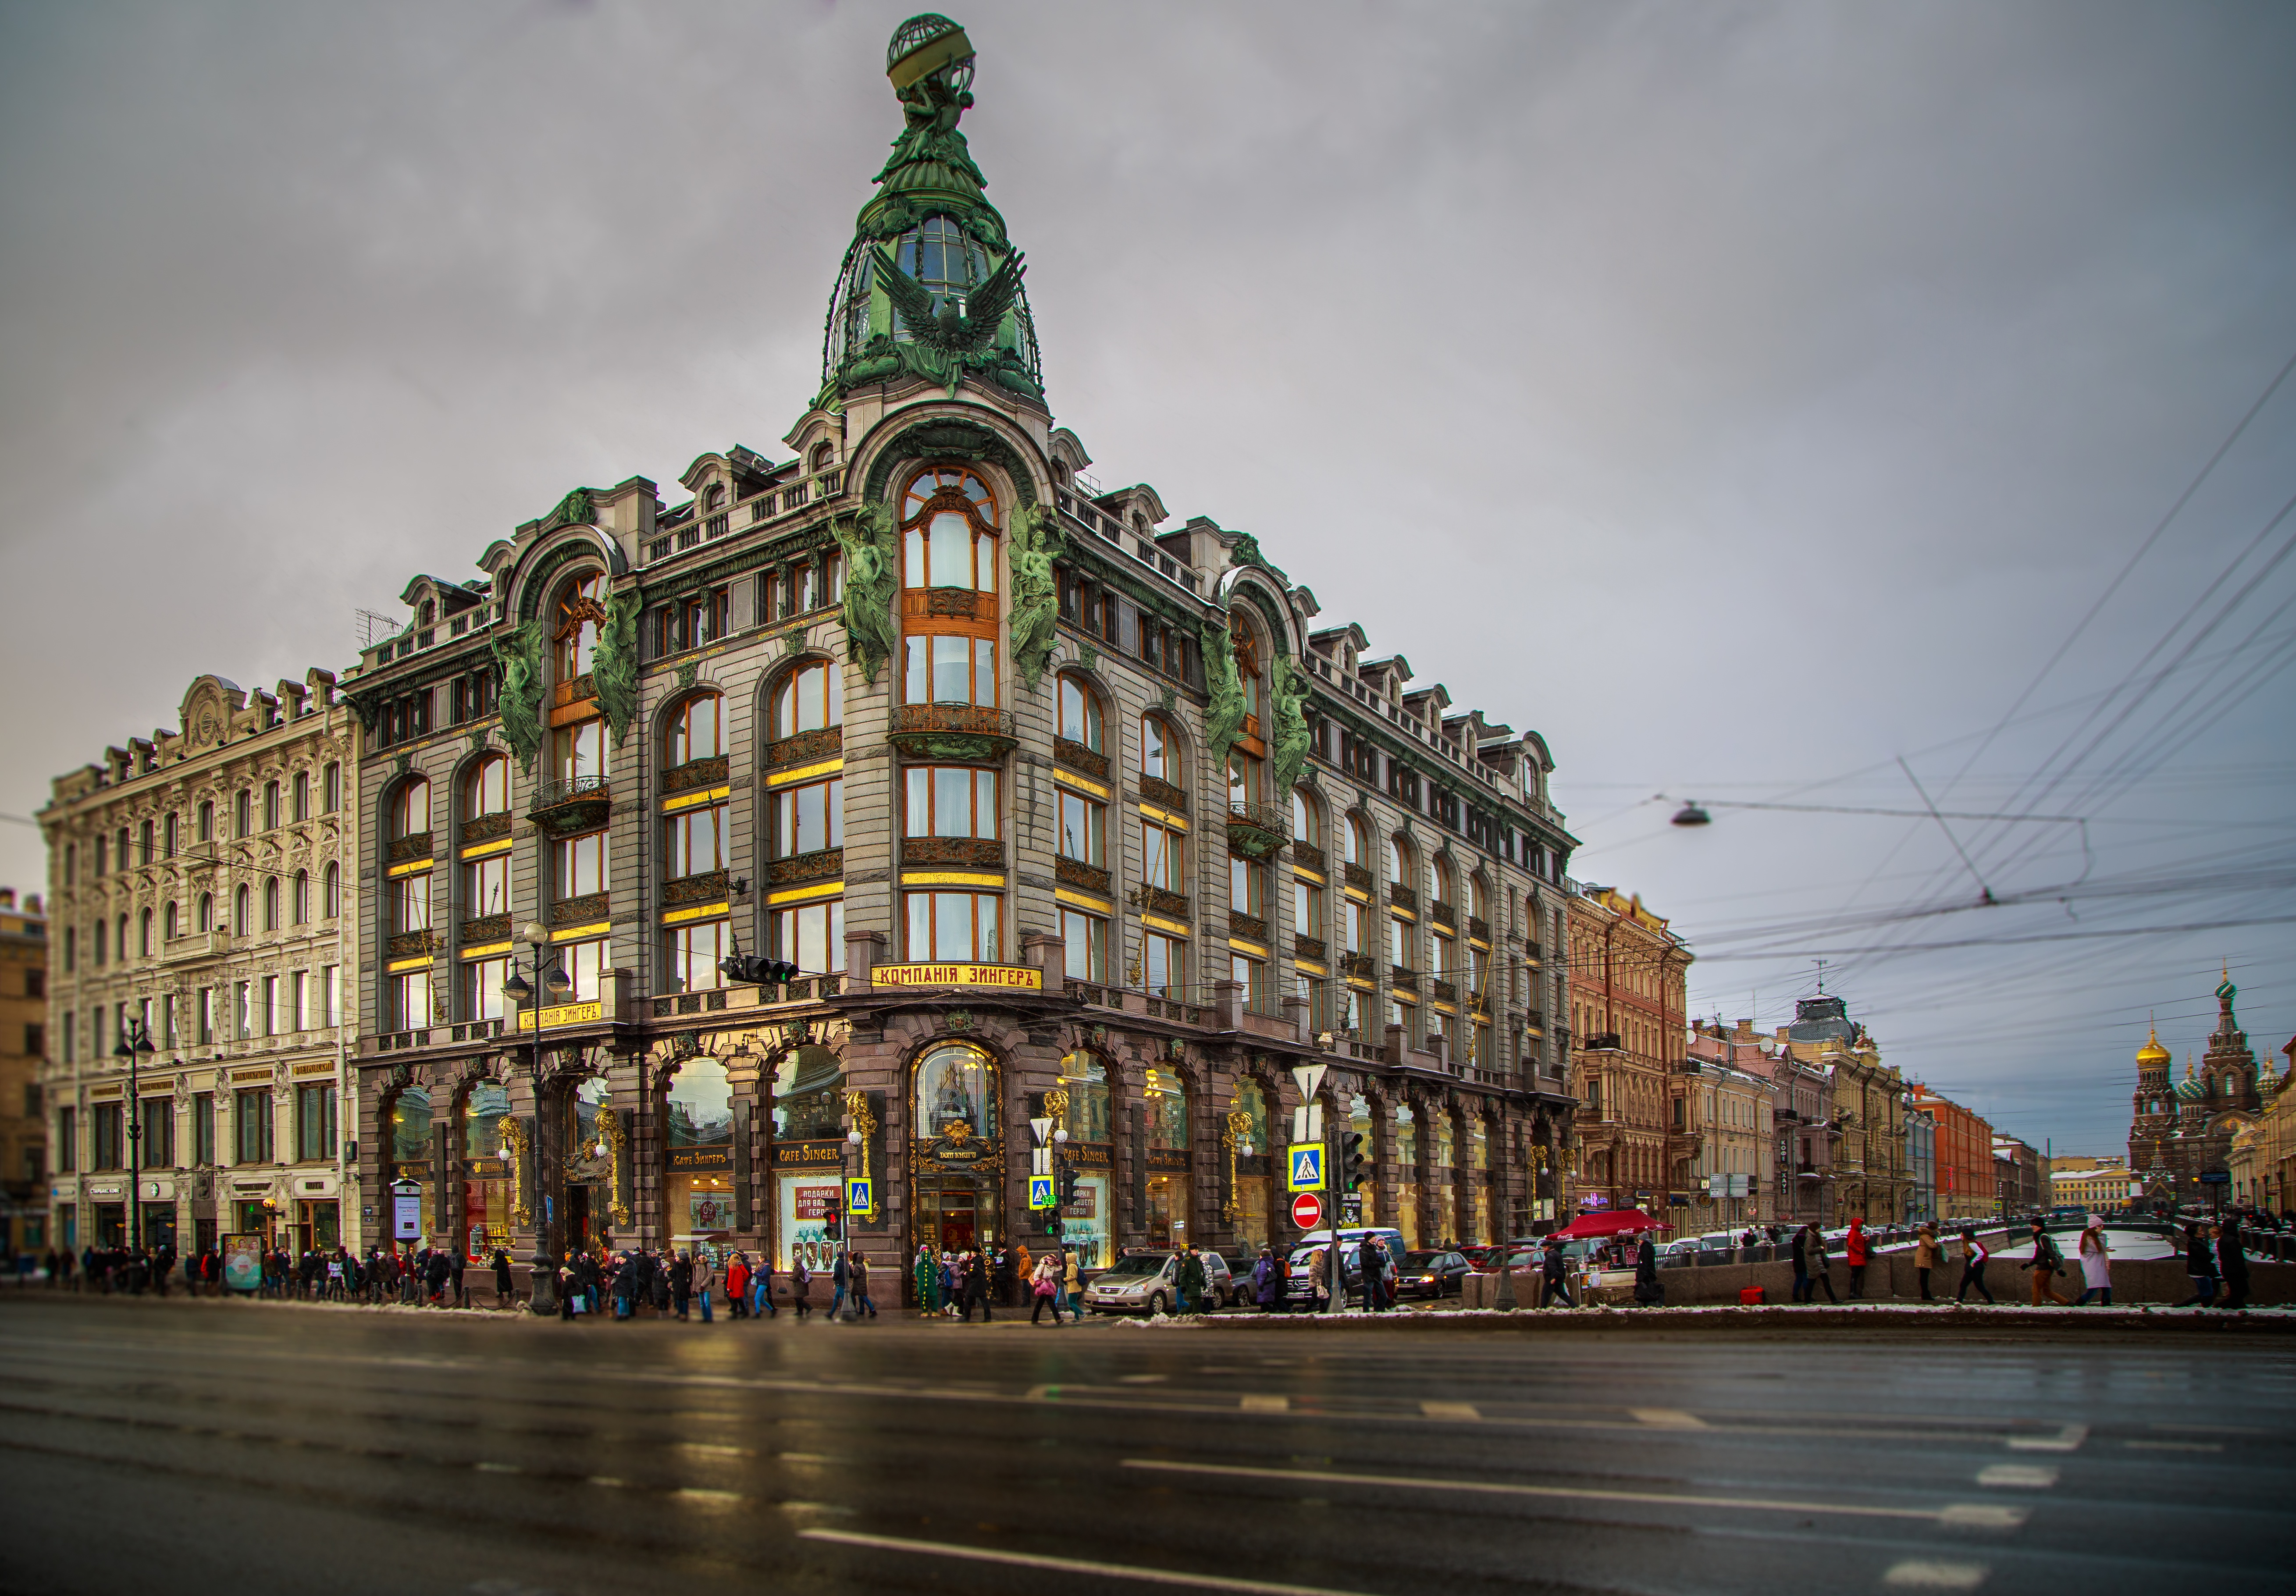 Санкт Петербург Купить Банки